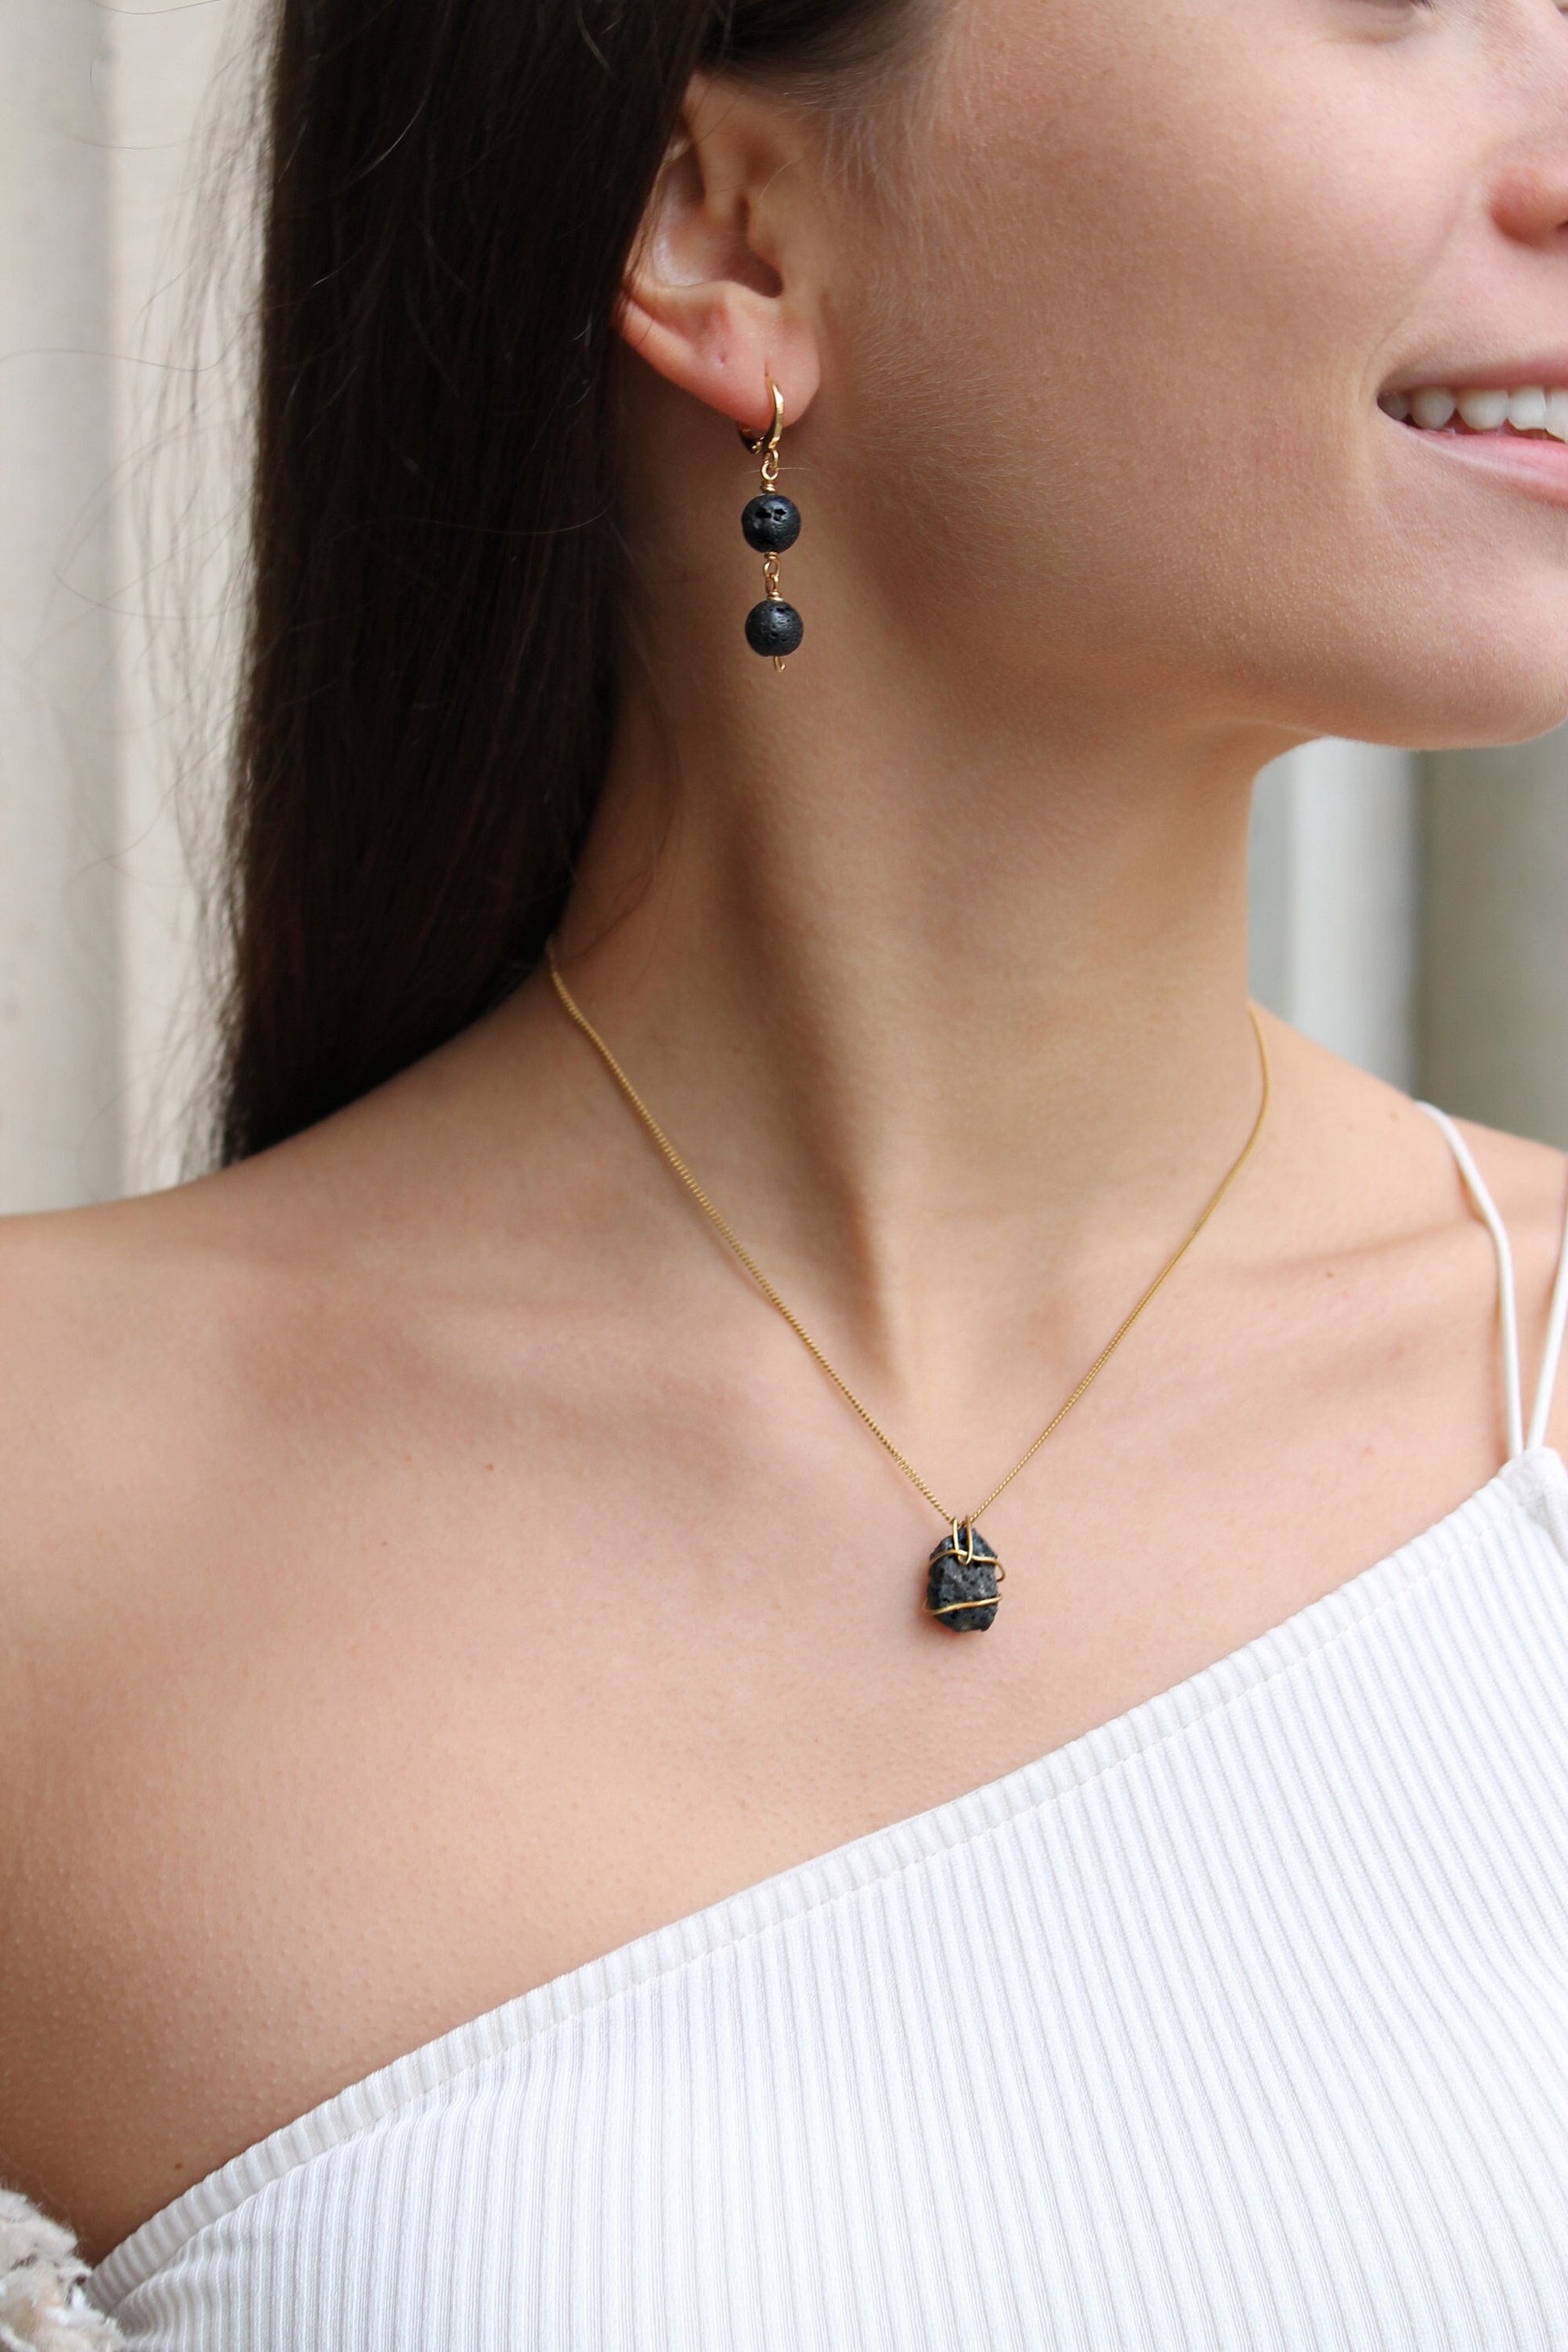 Lava Rock Necklace – Val Jewellery